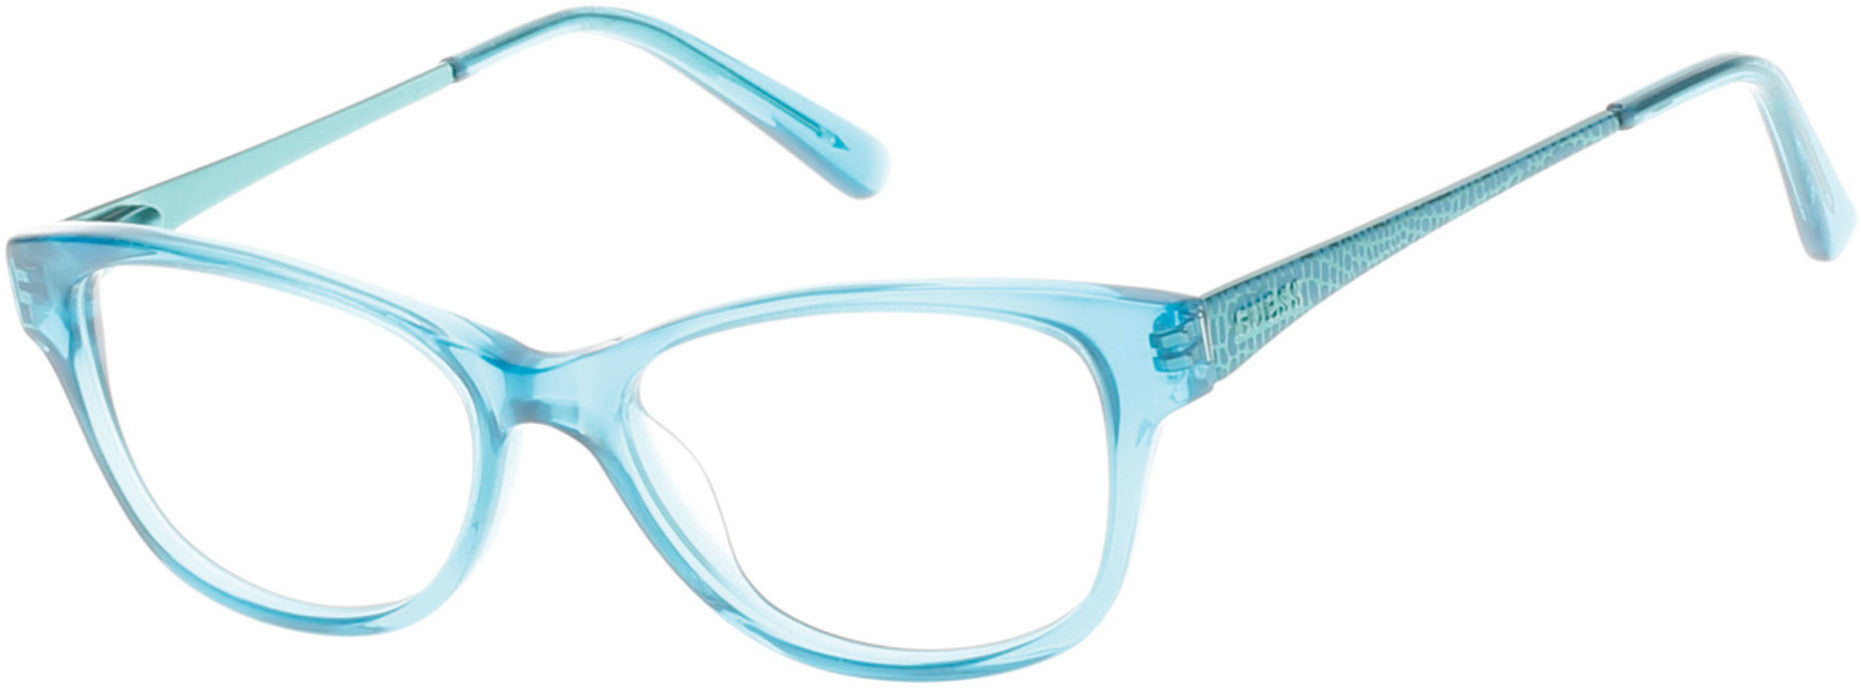 Guess GU9135 Rectangular Eyeglasses 089-089 - Turquoise/other